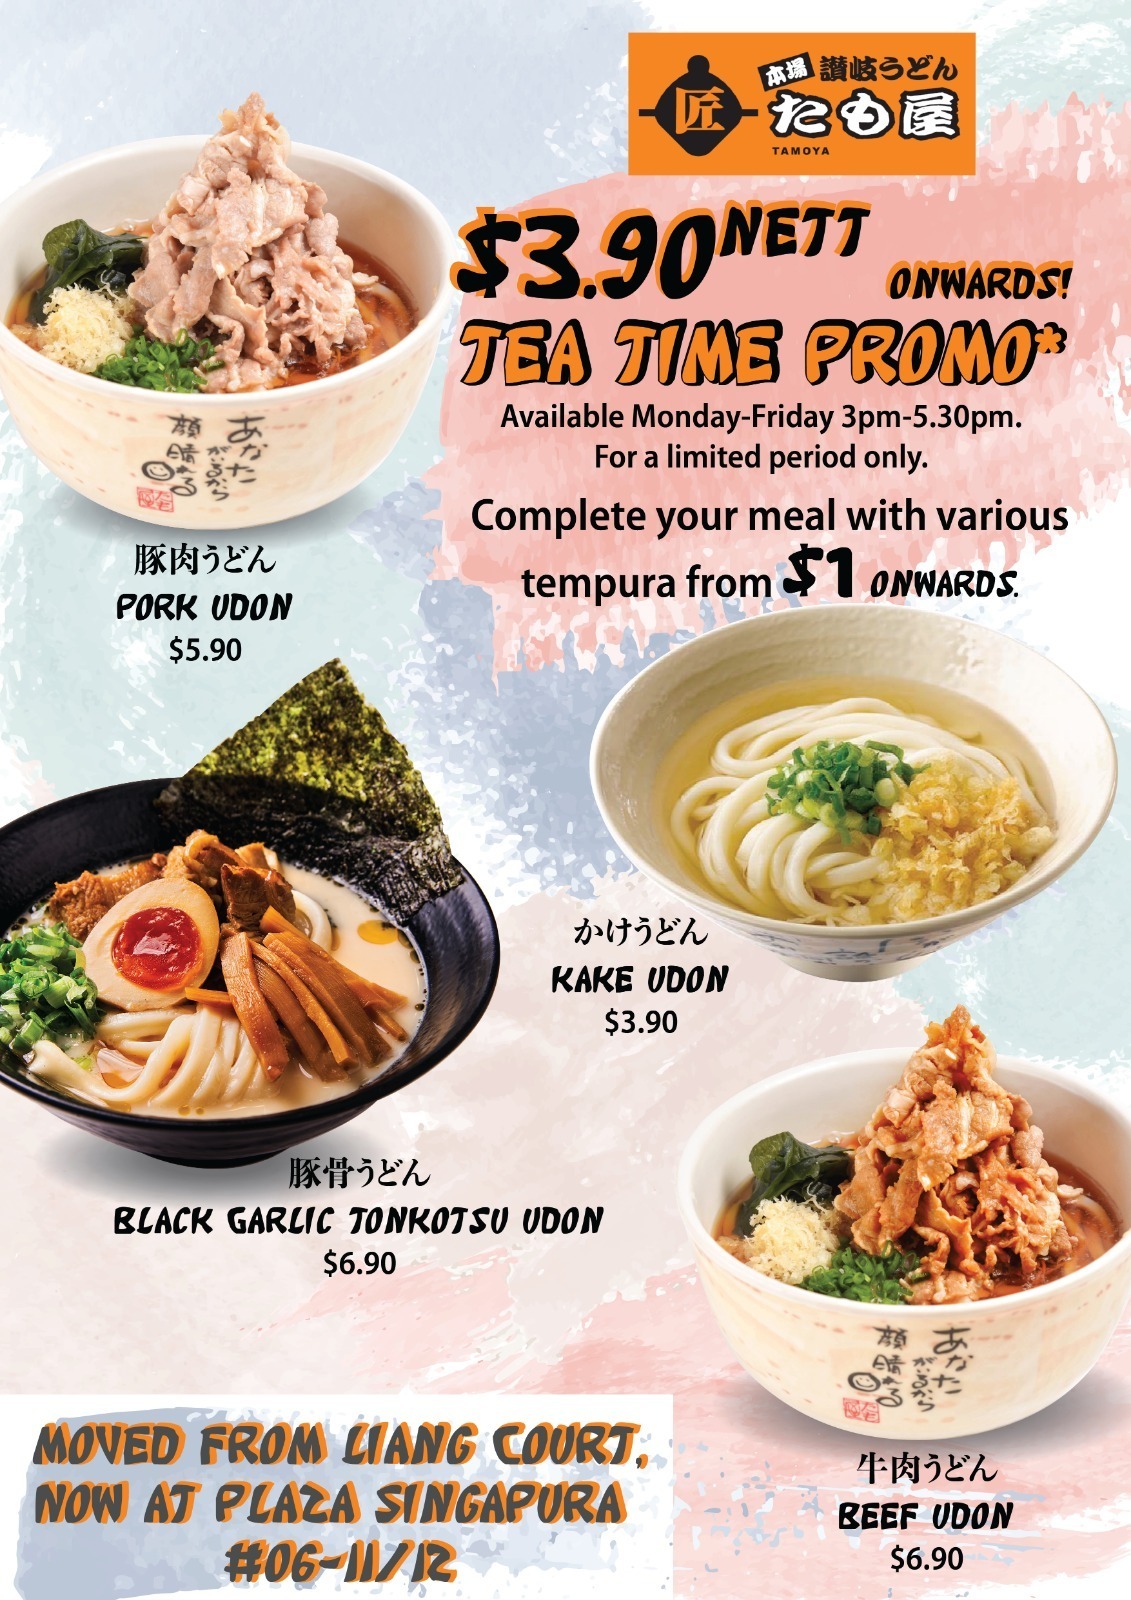 Tea Time Promo $3.90 Udon at Tamoya Udon, Plaza Singapura